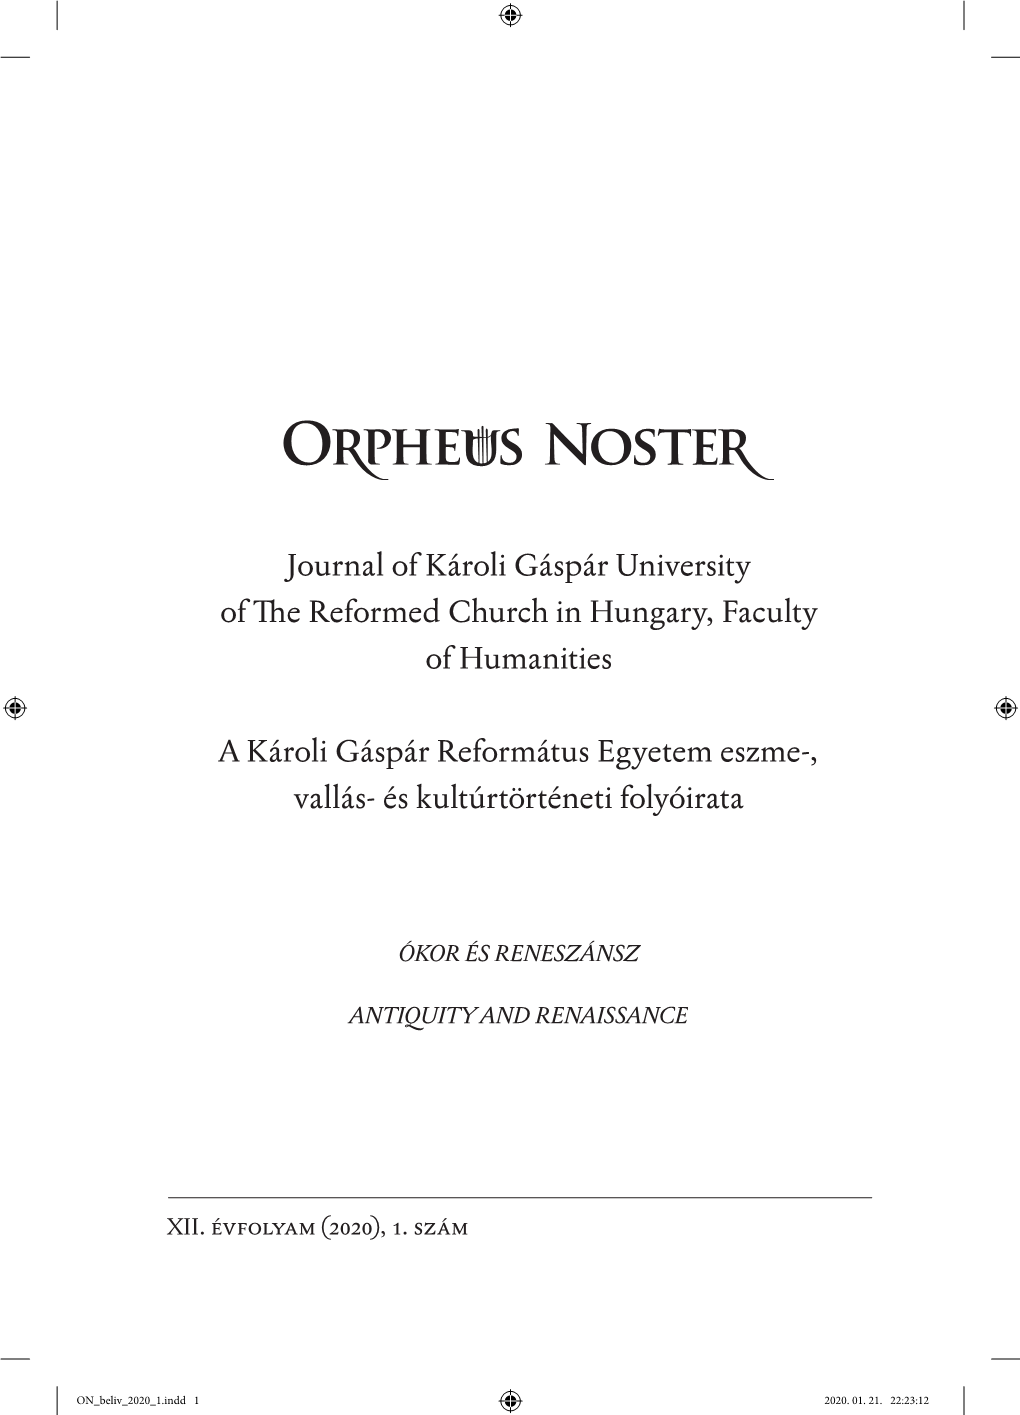 Orpheus Noster 12. Évf. 1. Sz. (2020.)